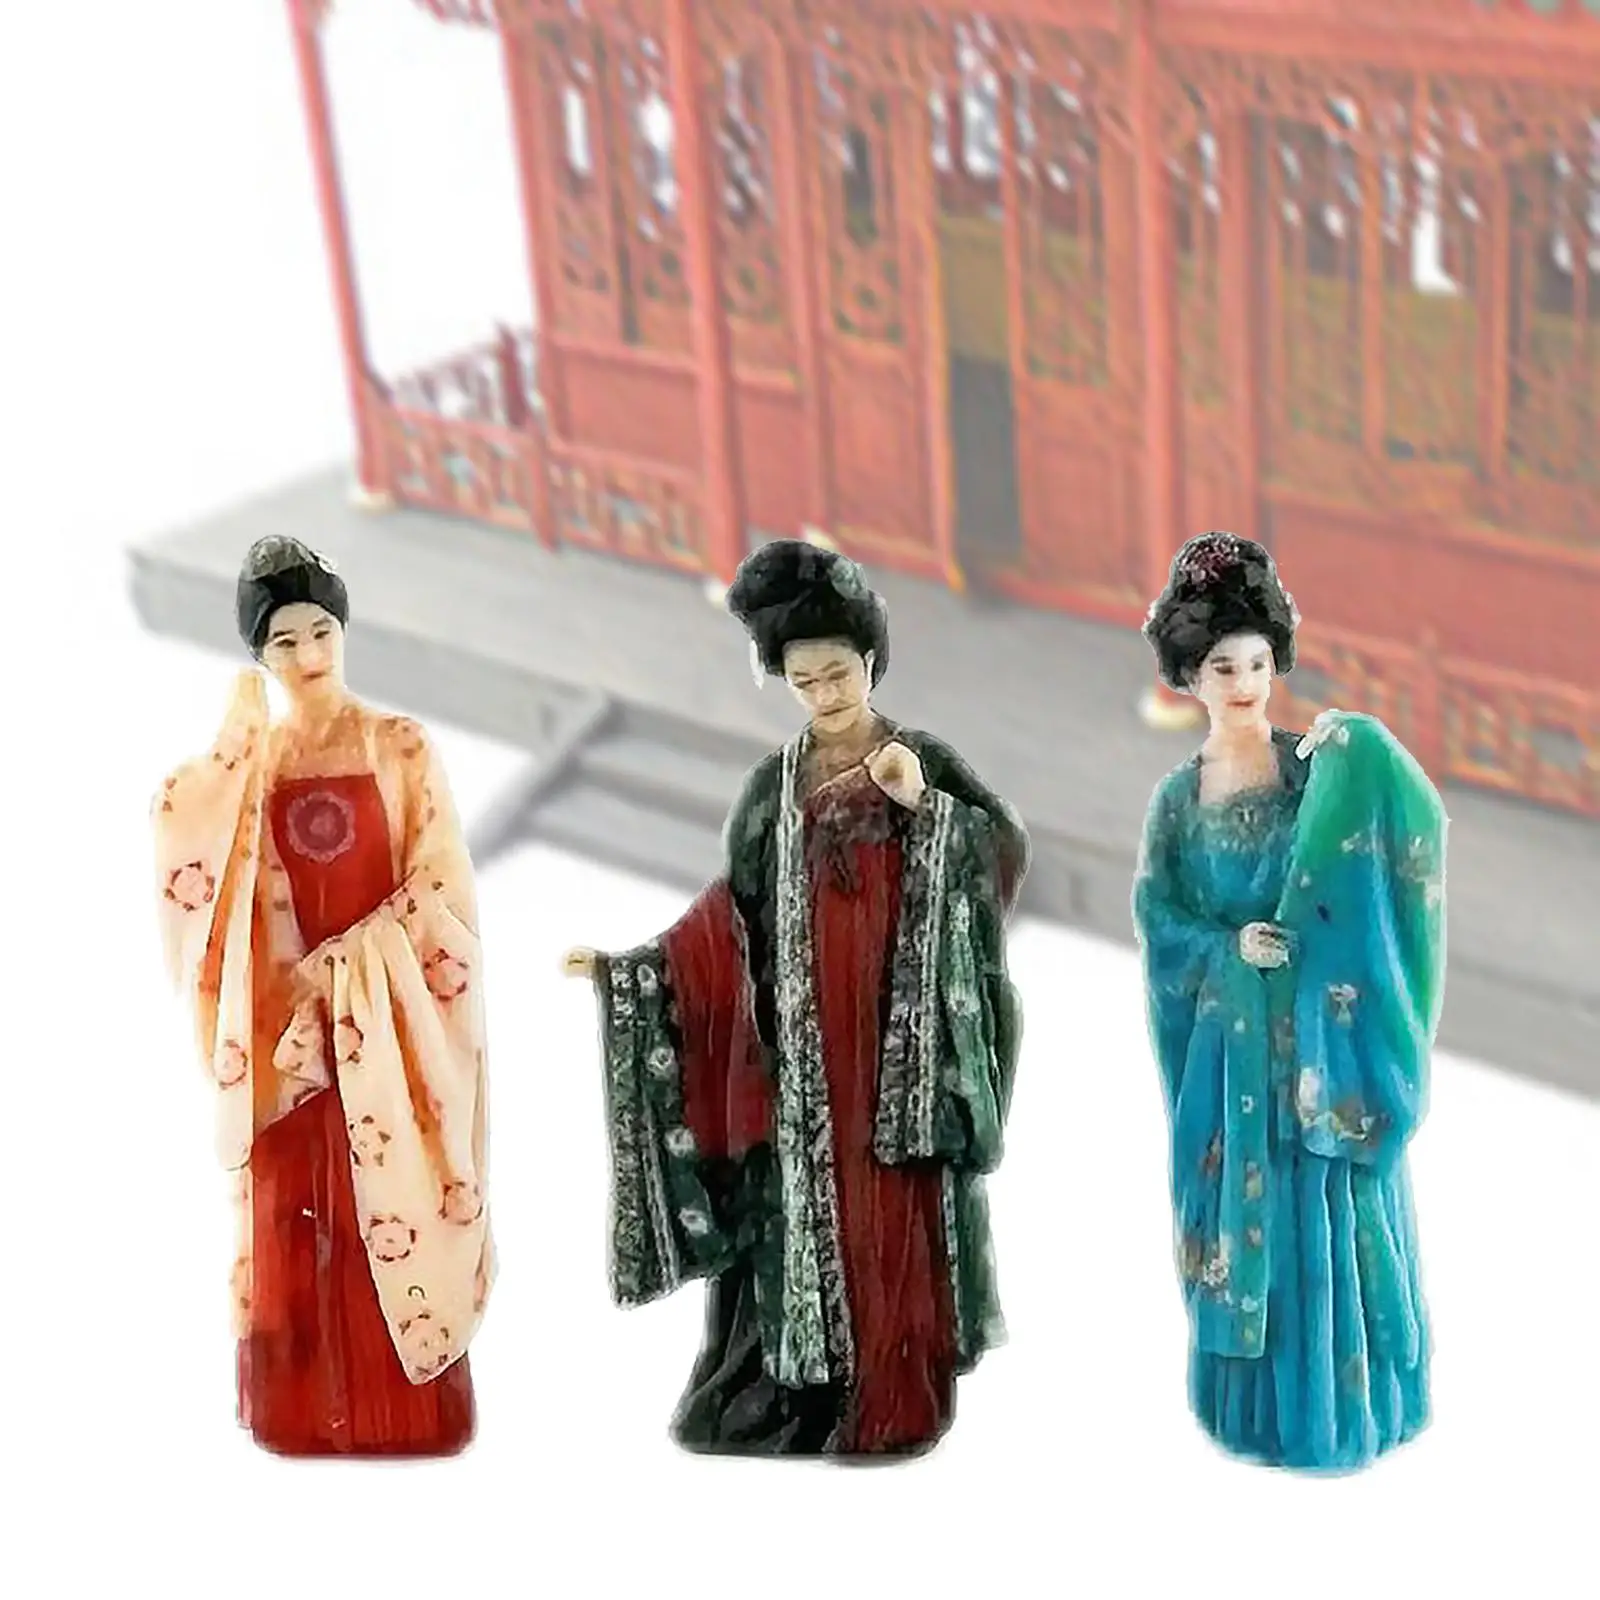 1:87 Miniature Model Figures Handmade for Scenery Landscape Dollhouse Layout